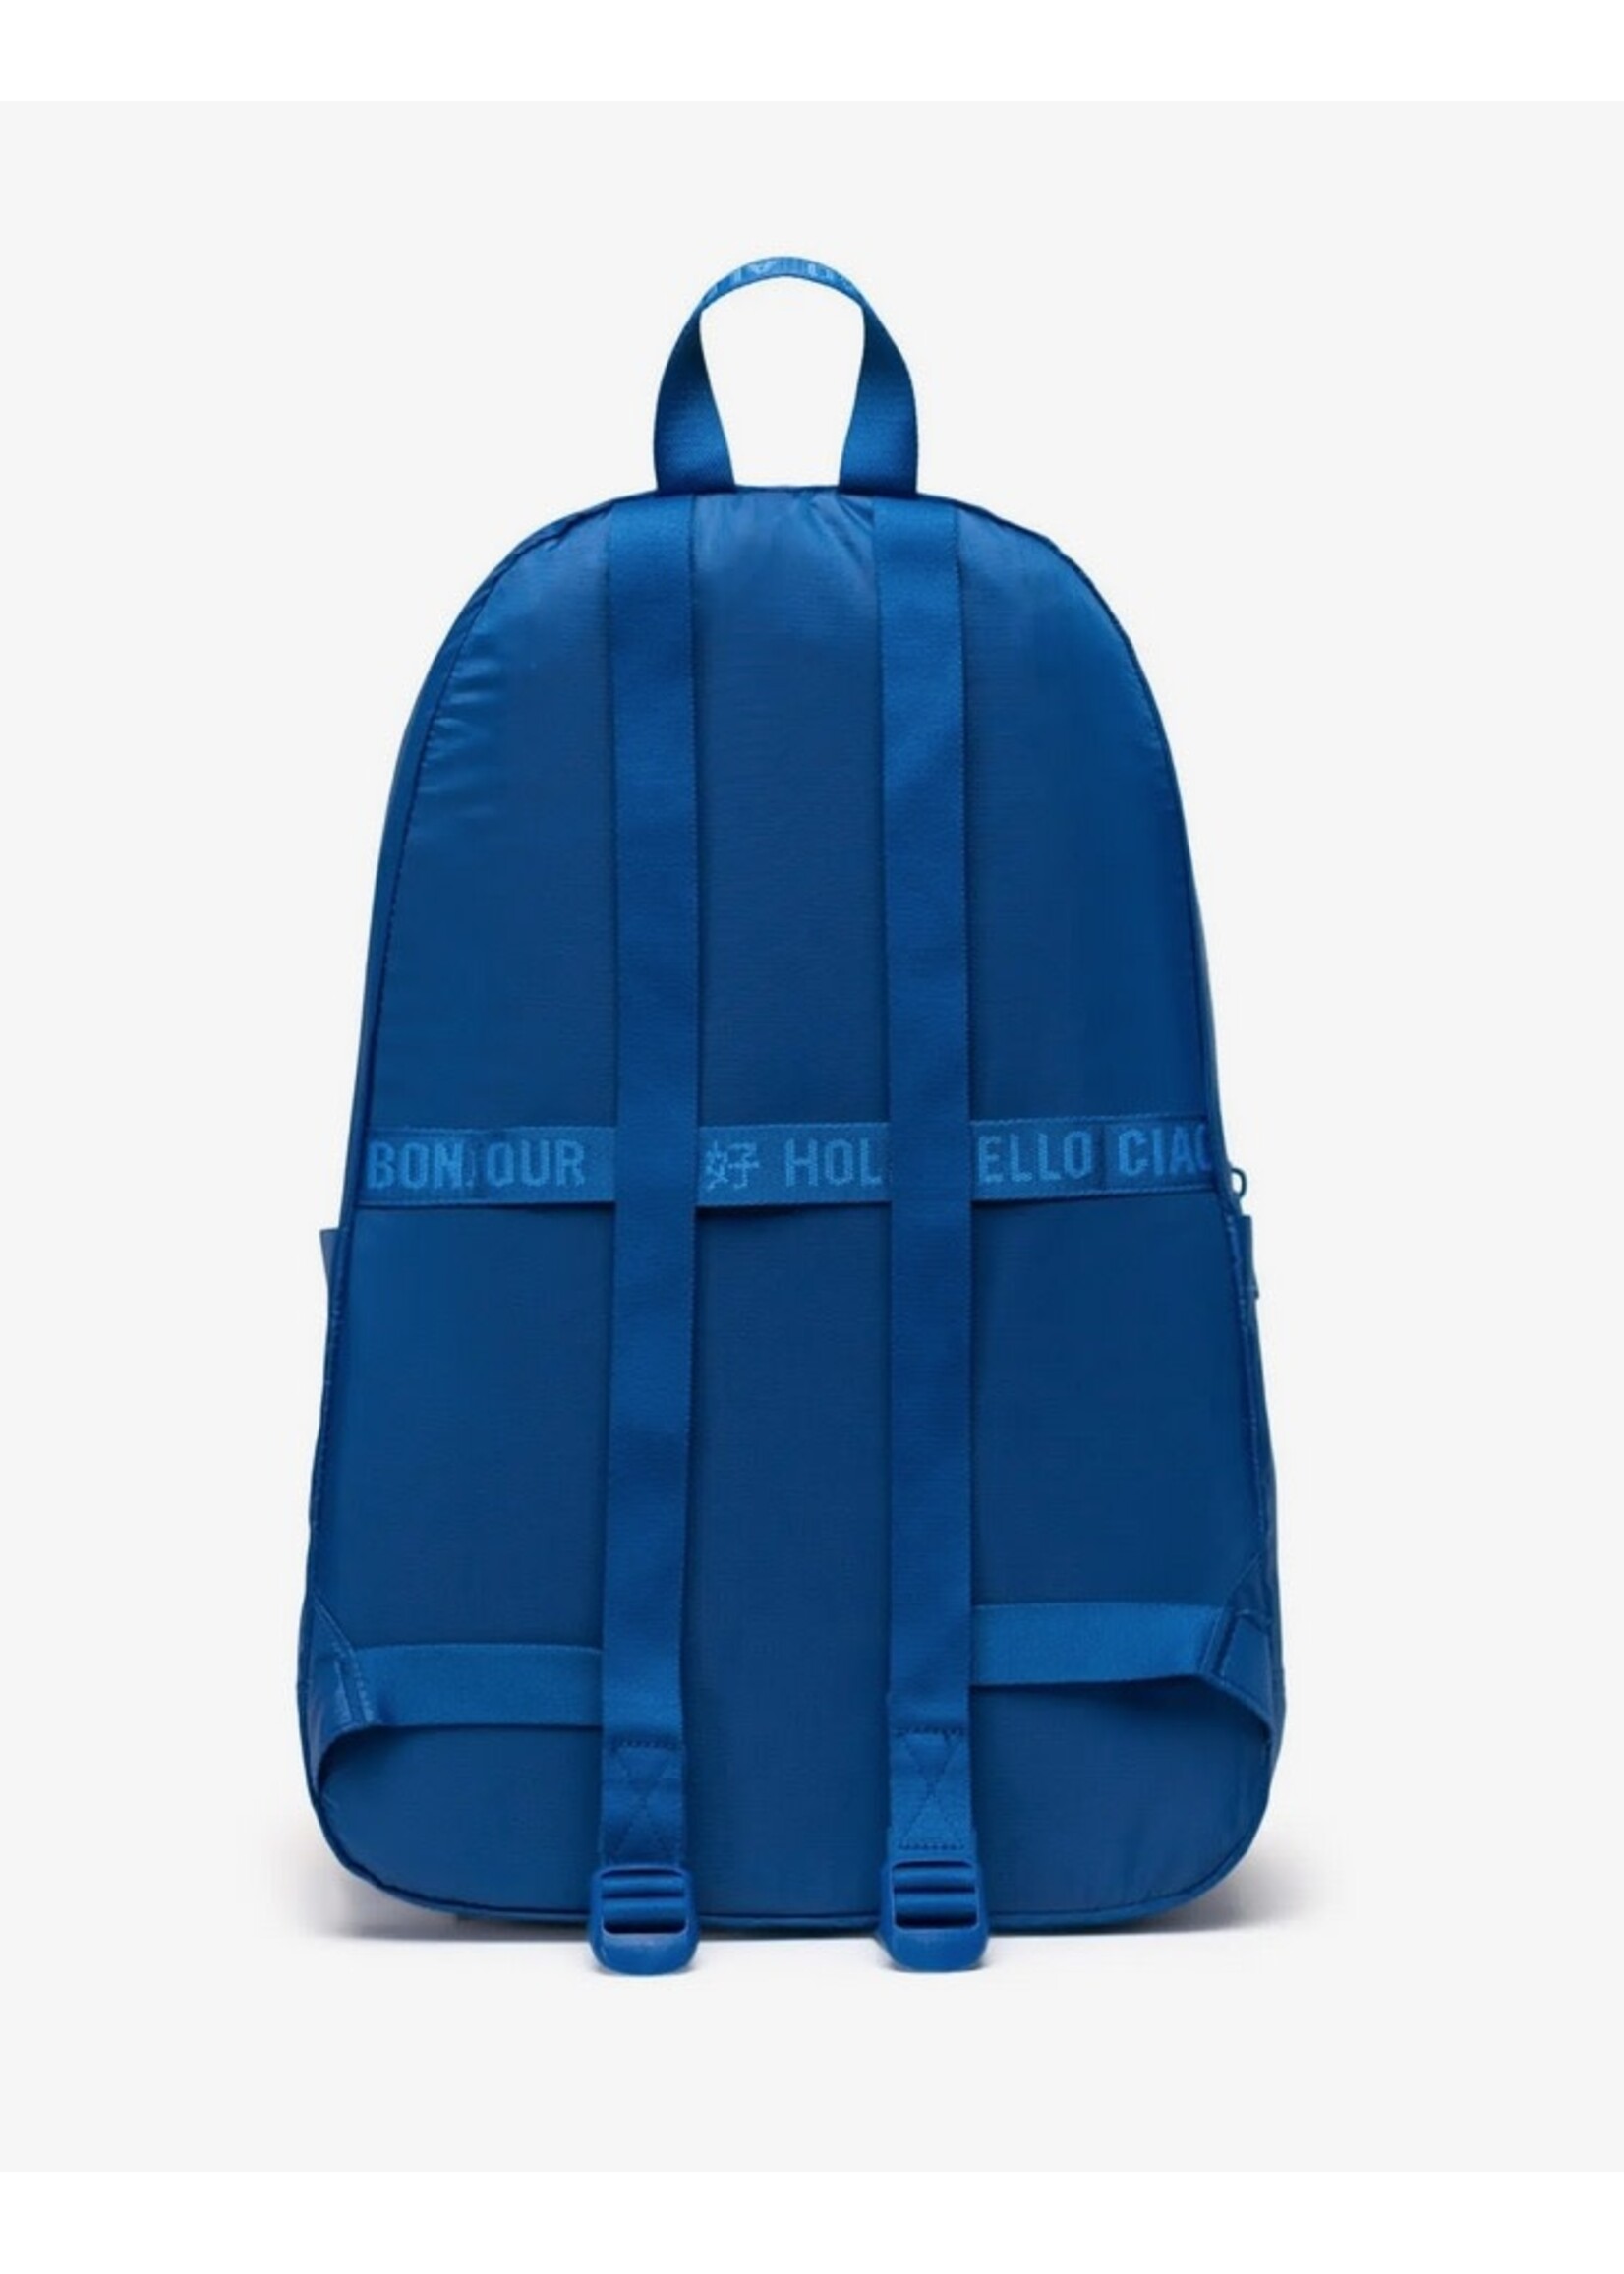 Herschel Supply Co. Herschel Supply, Rome Packable Backpack - 21.3L || True Blue